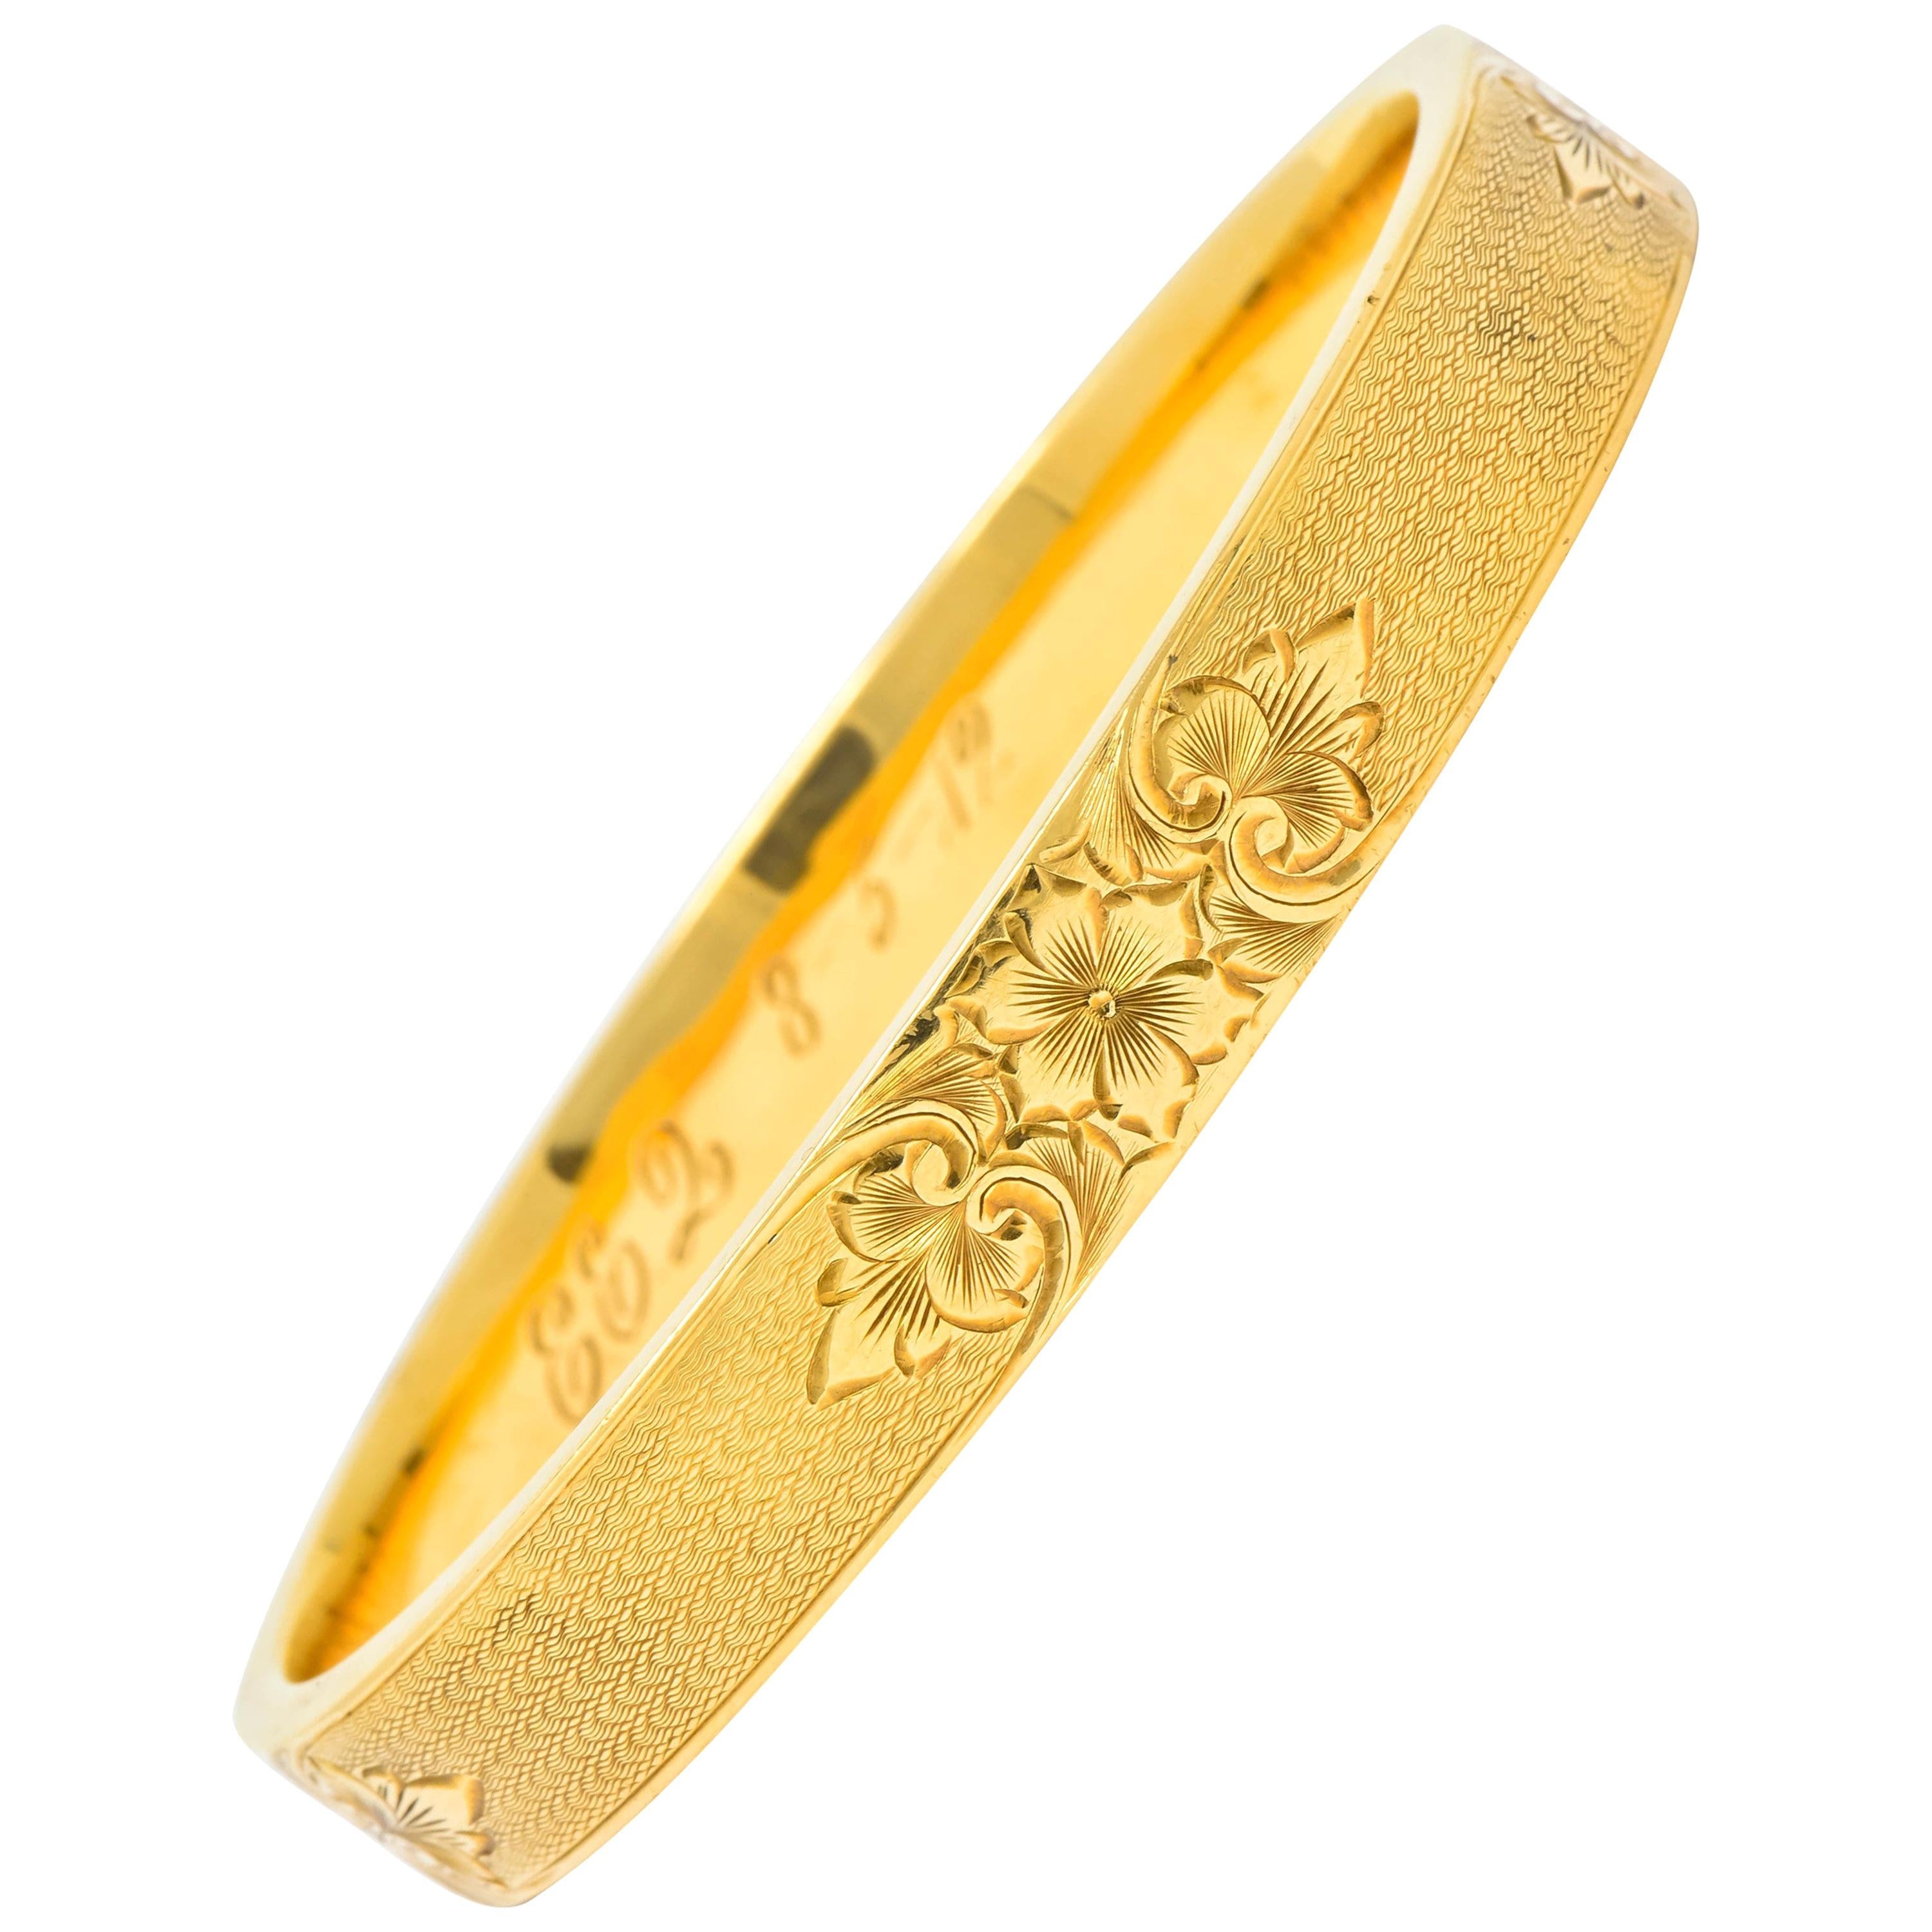 Charming Victorian 14 Karat Gold Floral Bangle Bracelet, circa 1900